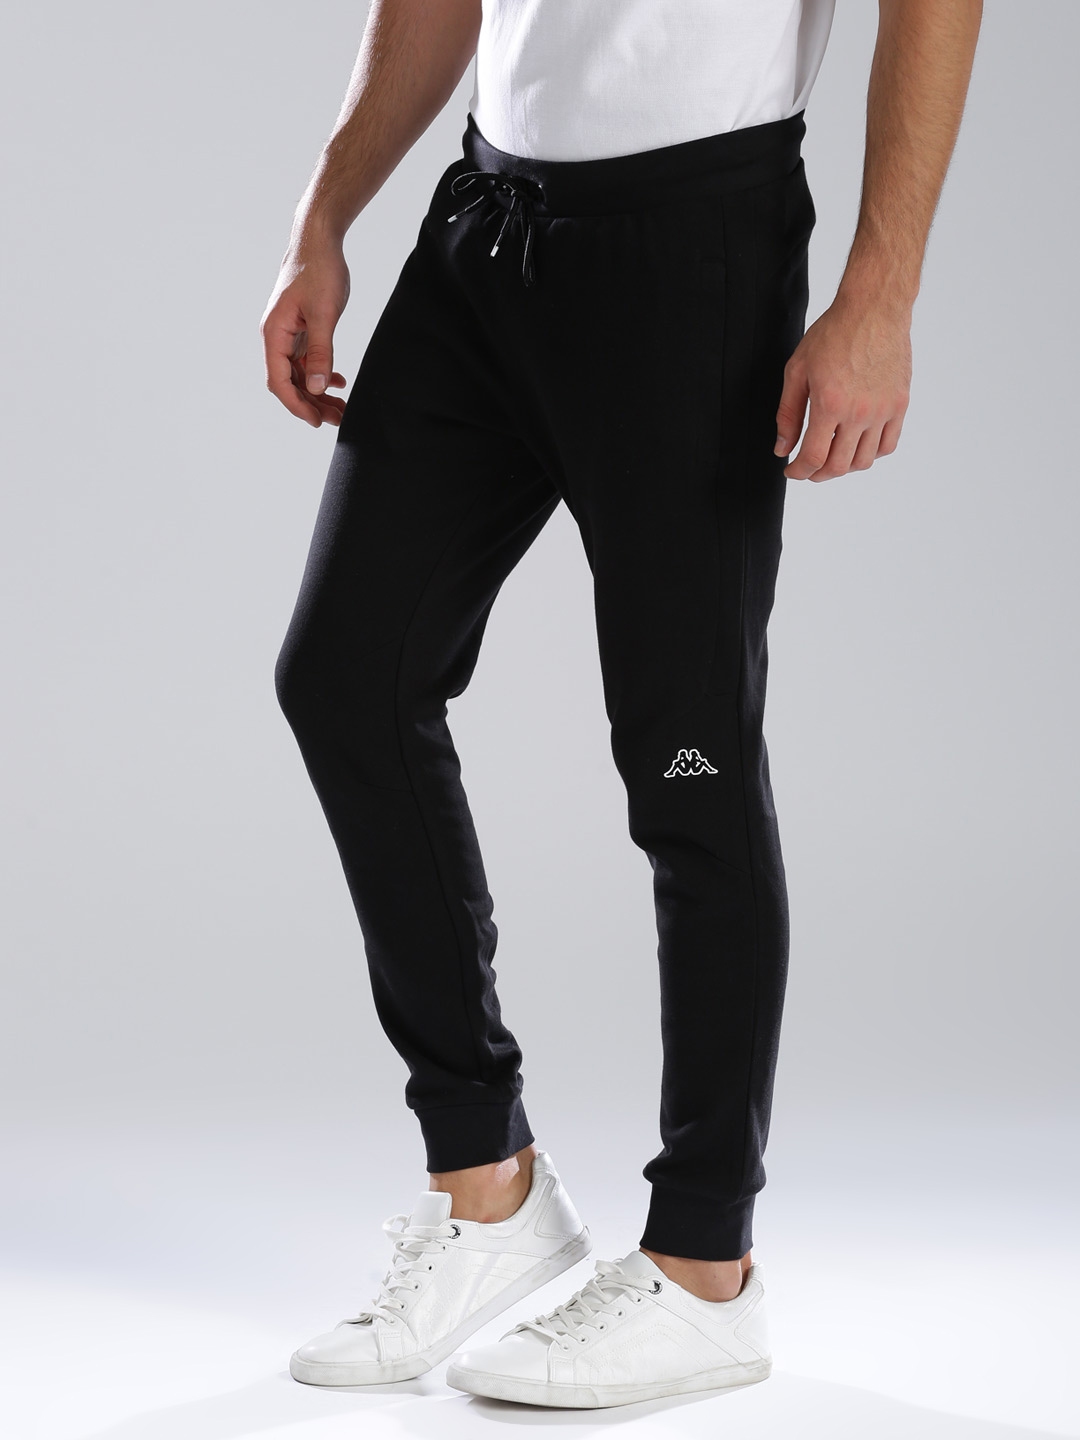 Buy Kappa Black Slim Fit Sports Wear Joggers - Track Pants for | Myntra